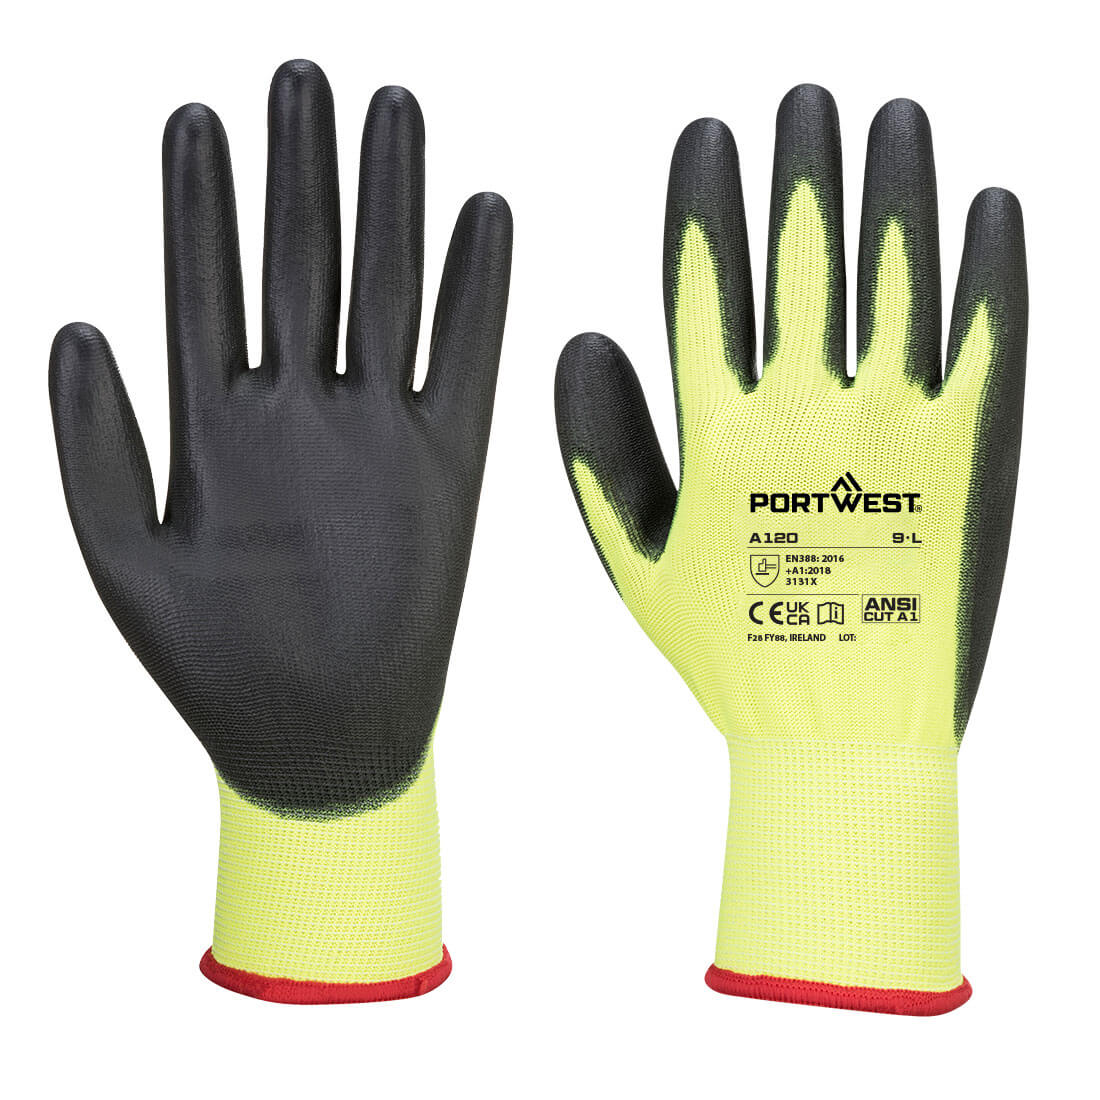 Portwest A120 PU Palm Glove for General Handling